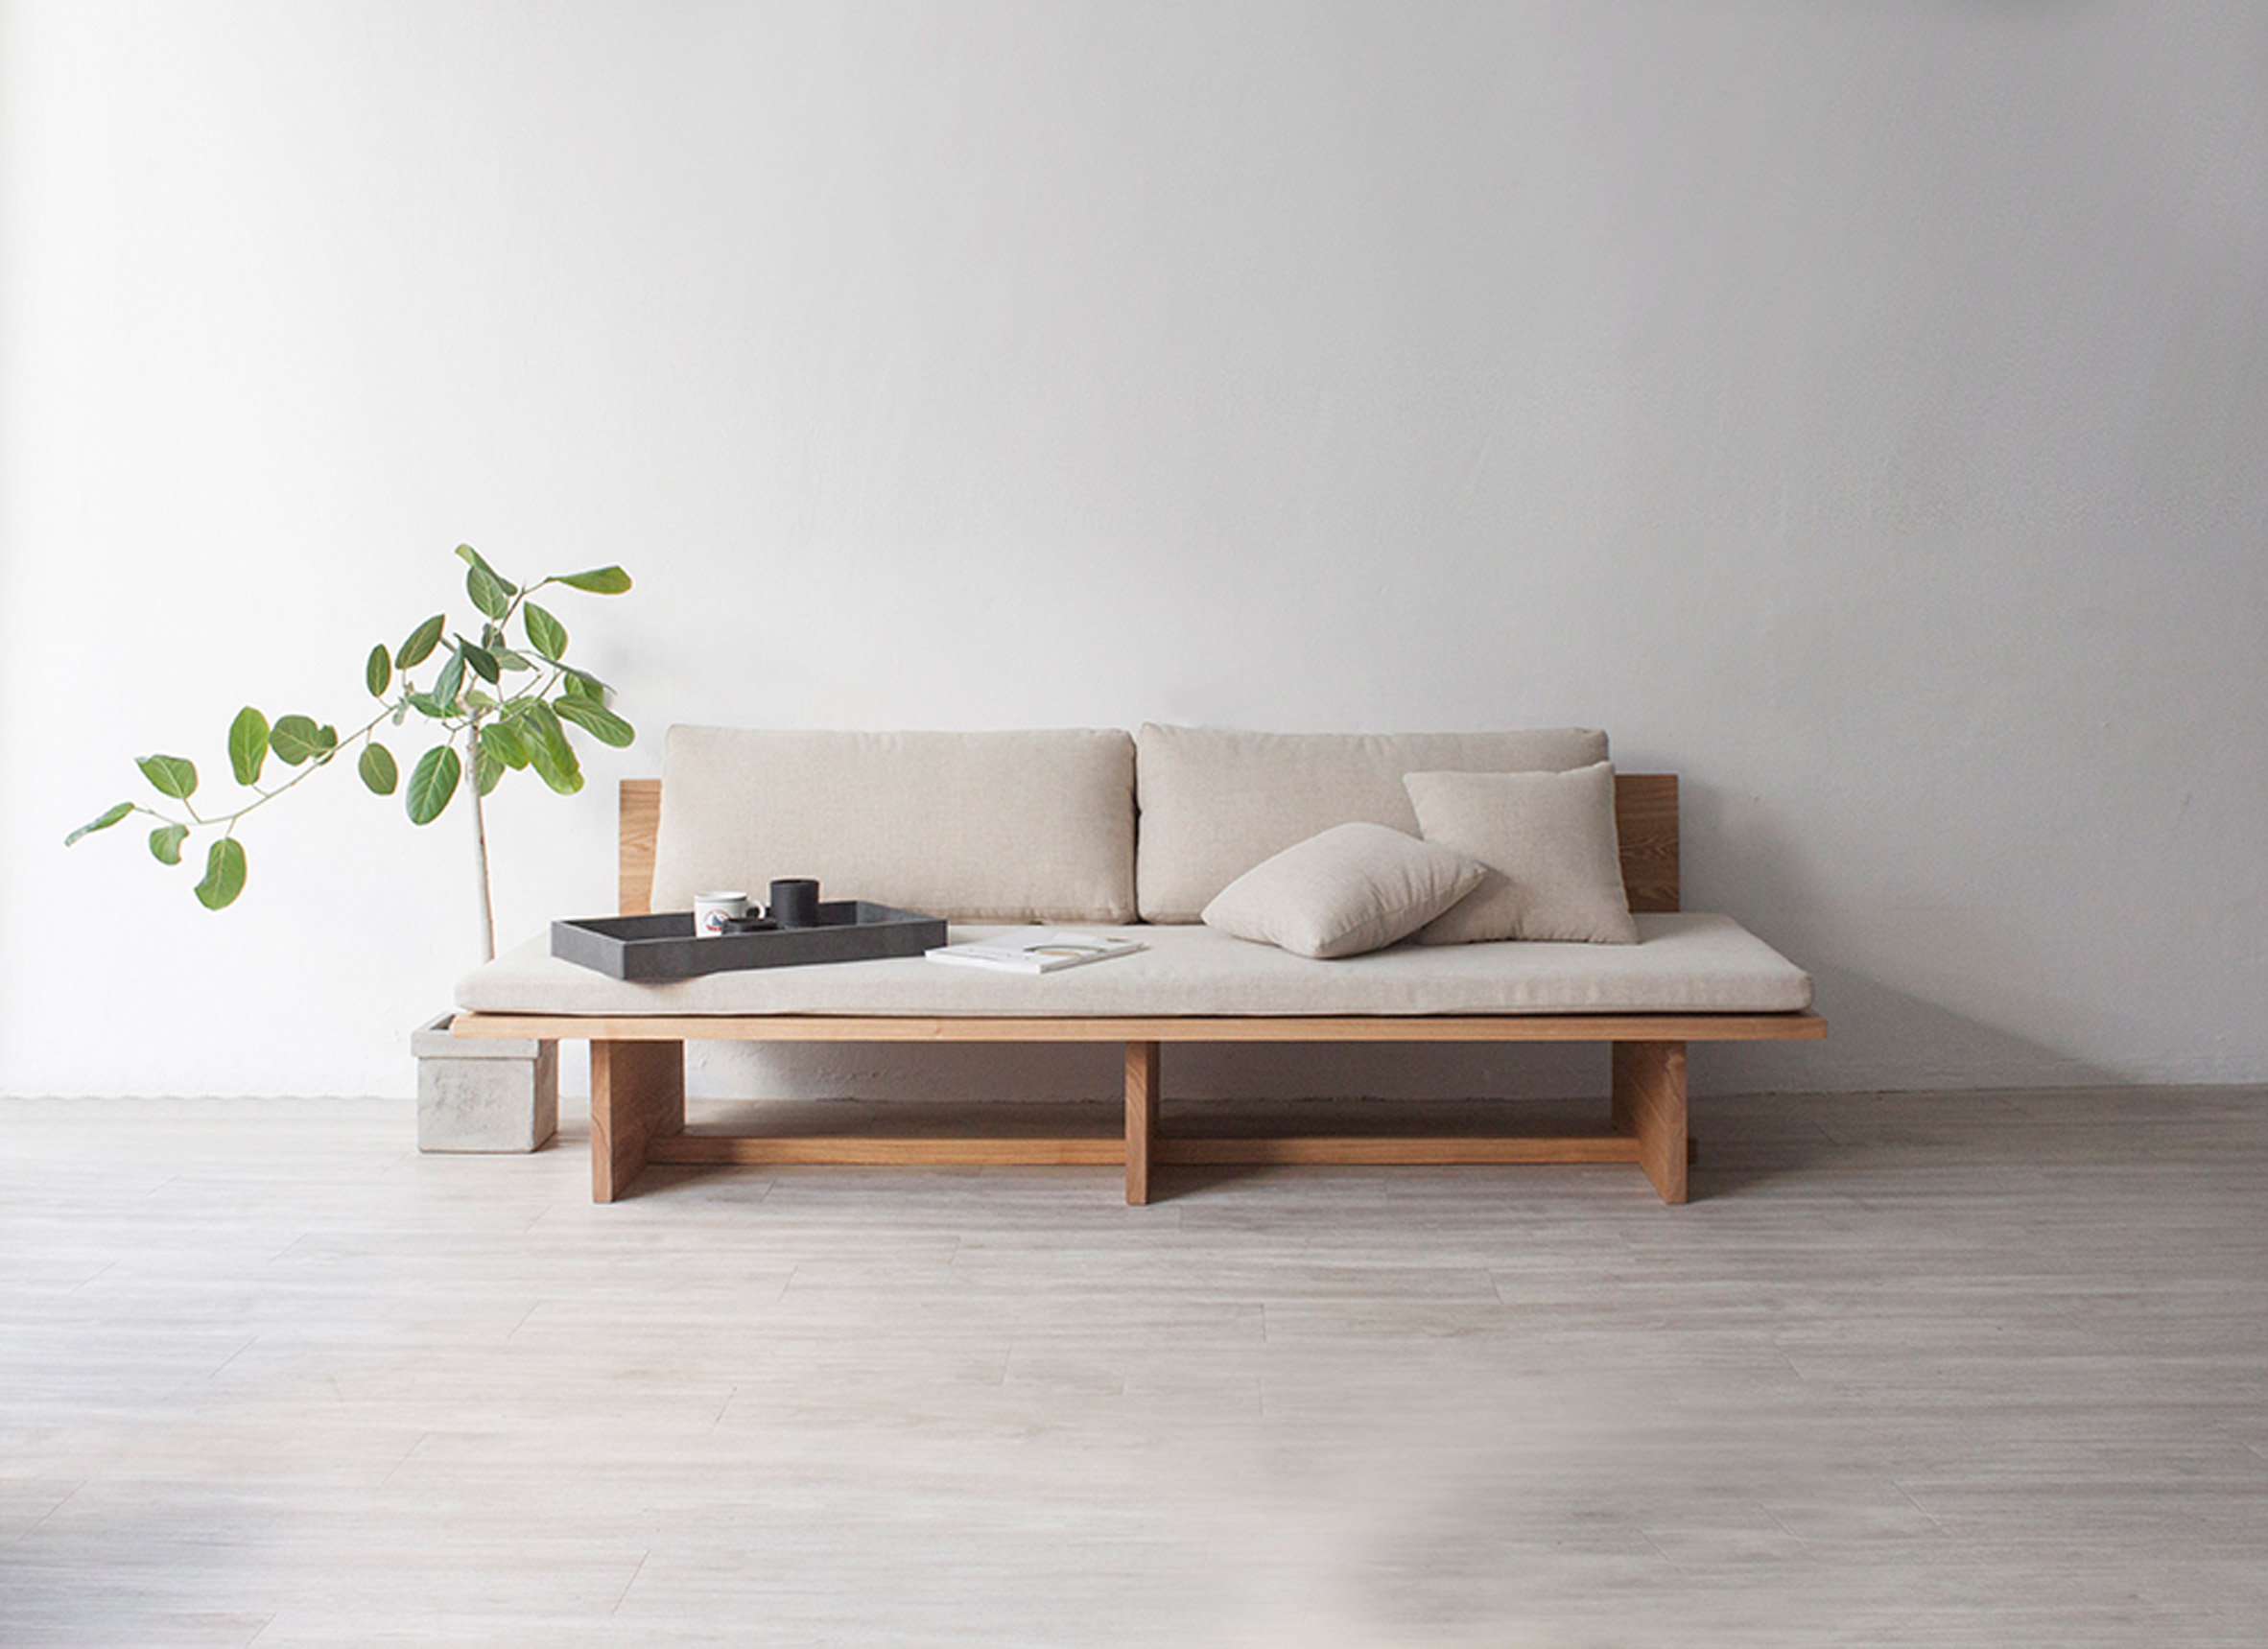 blank-daybed-sofa-cho-hyung-suk-design-studio-munito-design-furniture-_dezeen_2364_col_13